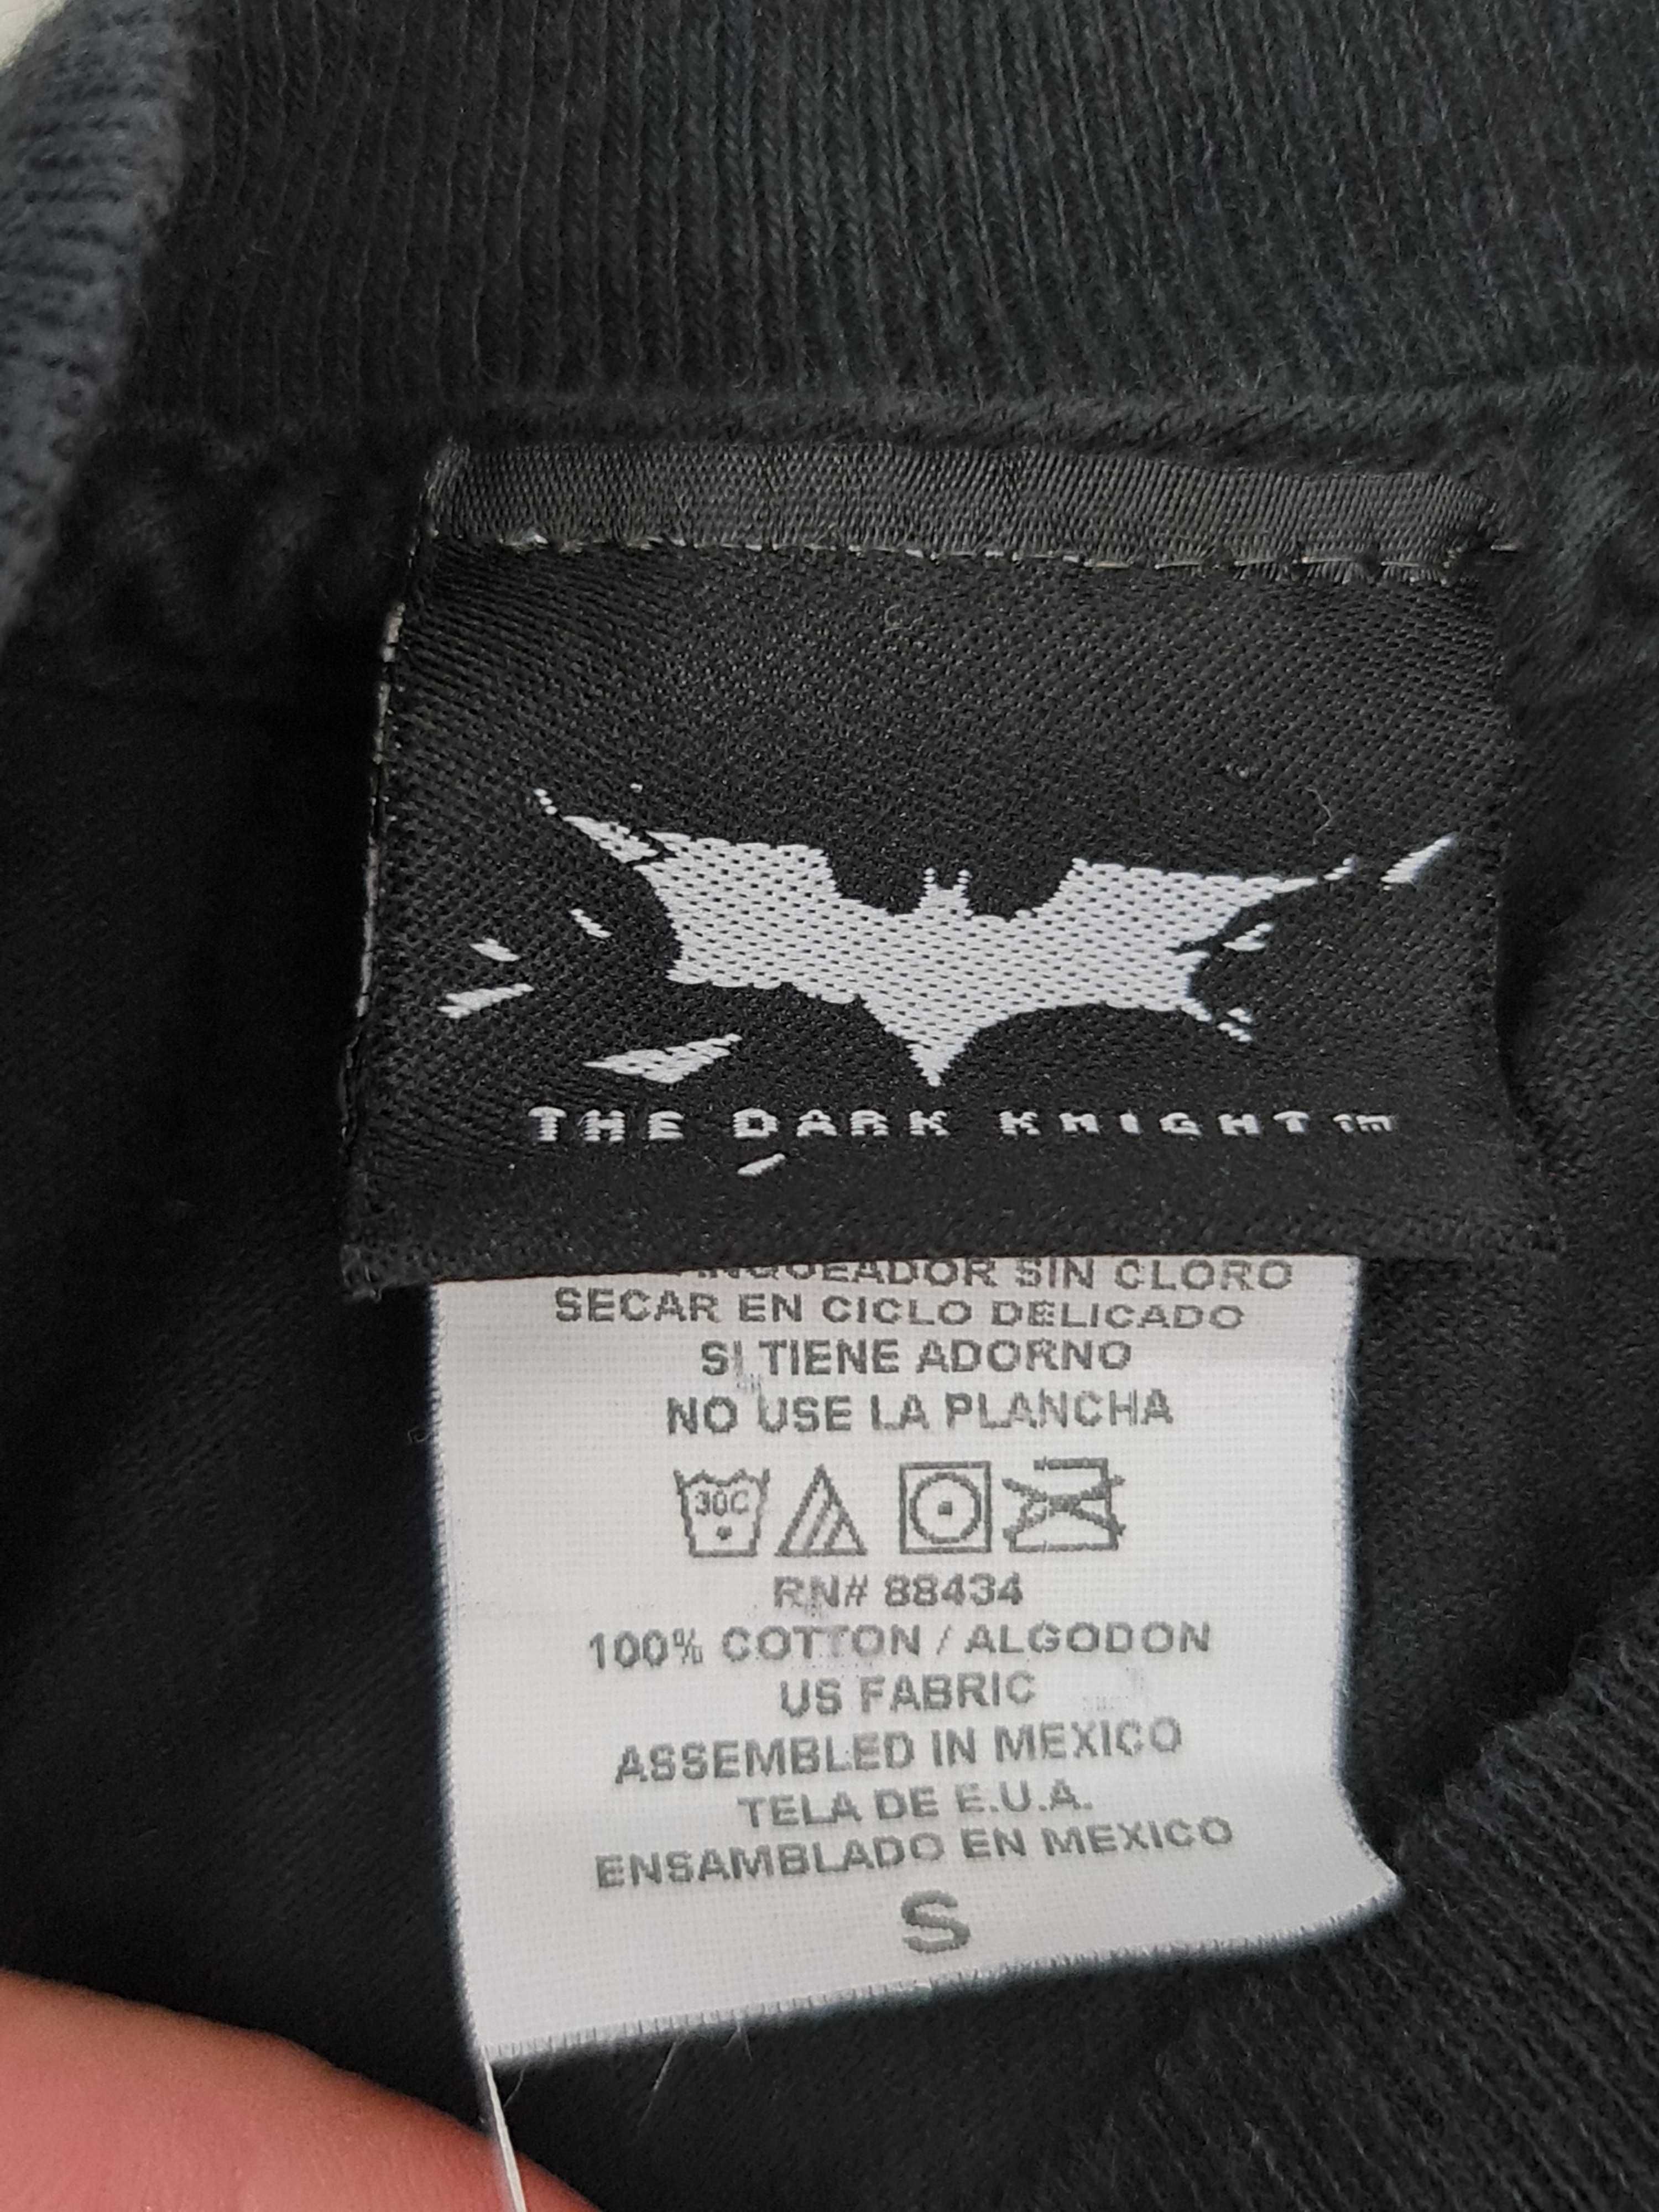 Koszulka T-shirt Batman Joker Vintage Oryginalna Oficjalna Rozmiar S